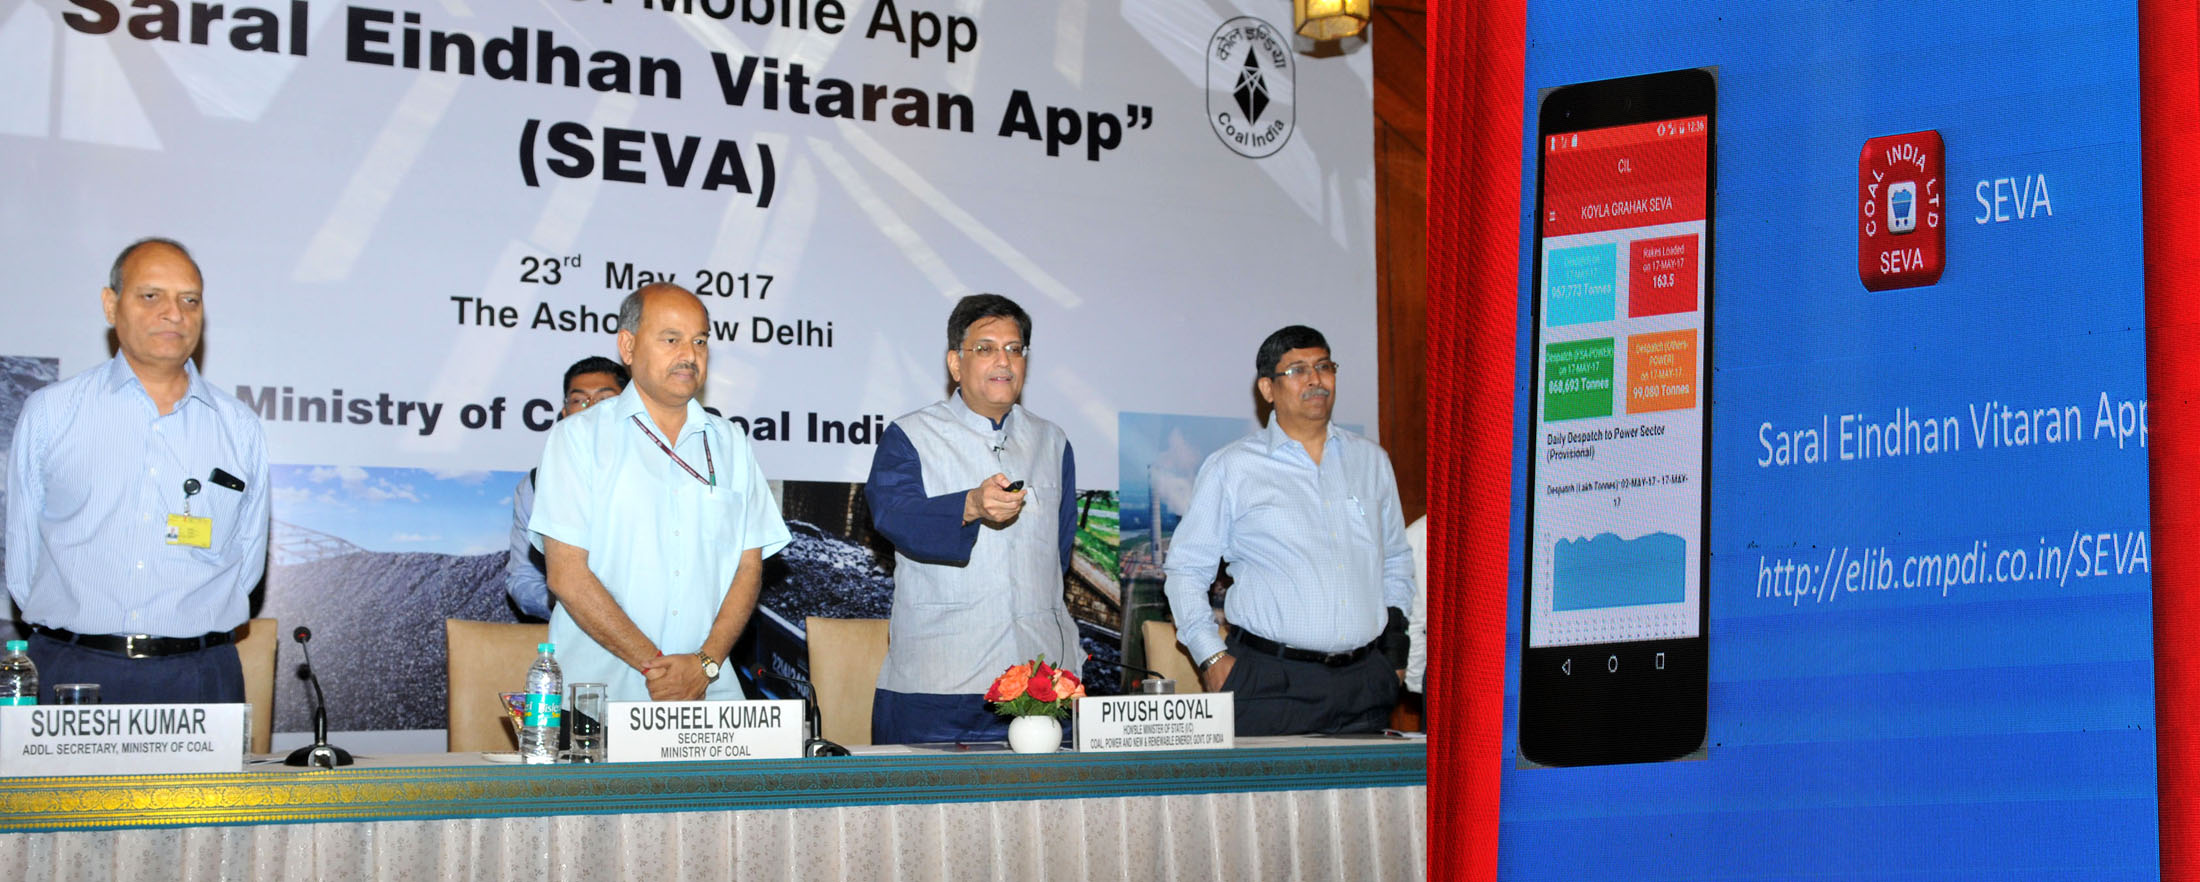 Saral Eindhan Vitaran App Launched